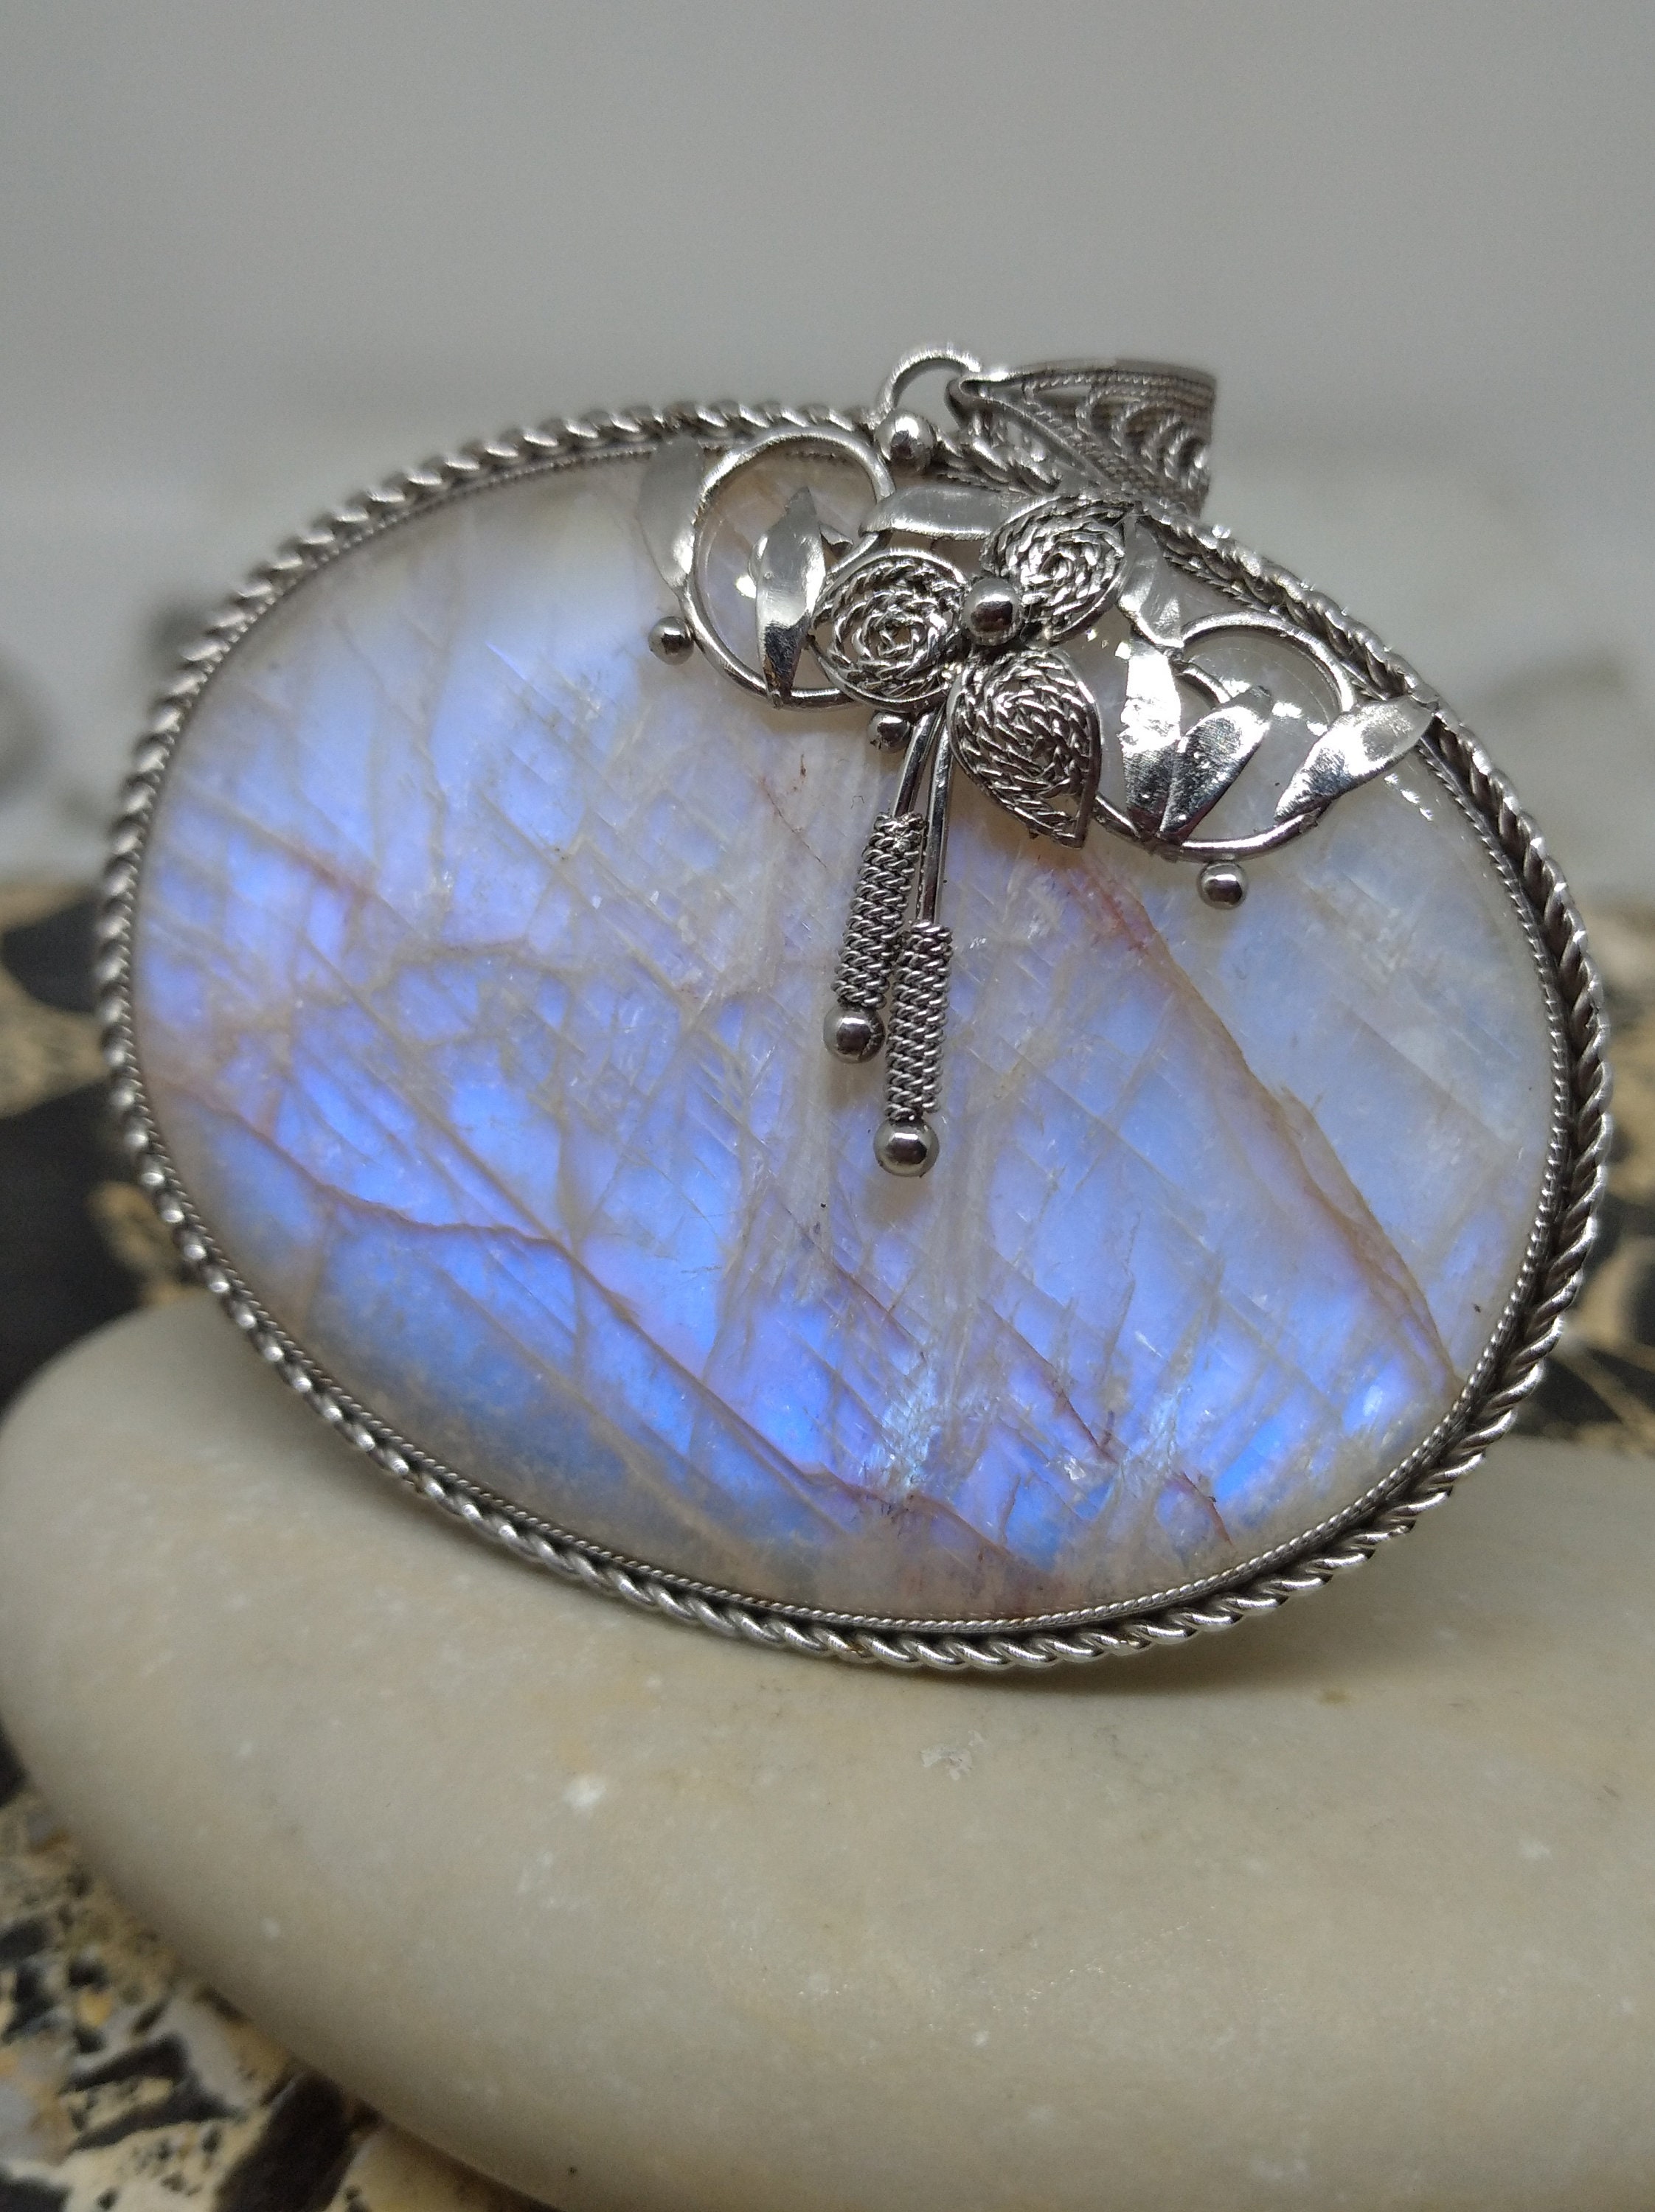 Moonstone pendant iridescent stone filigree steel jewelry | Etsy